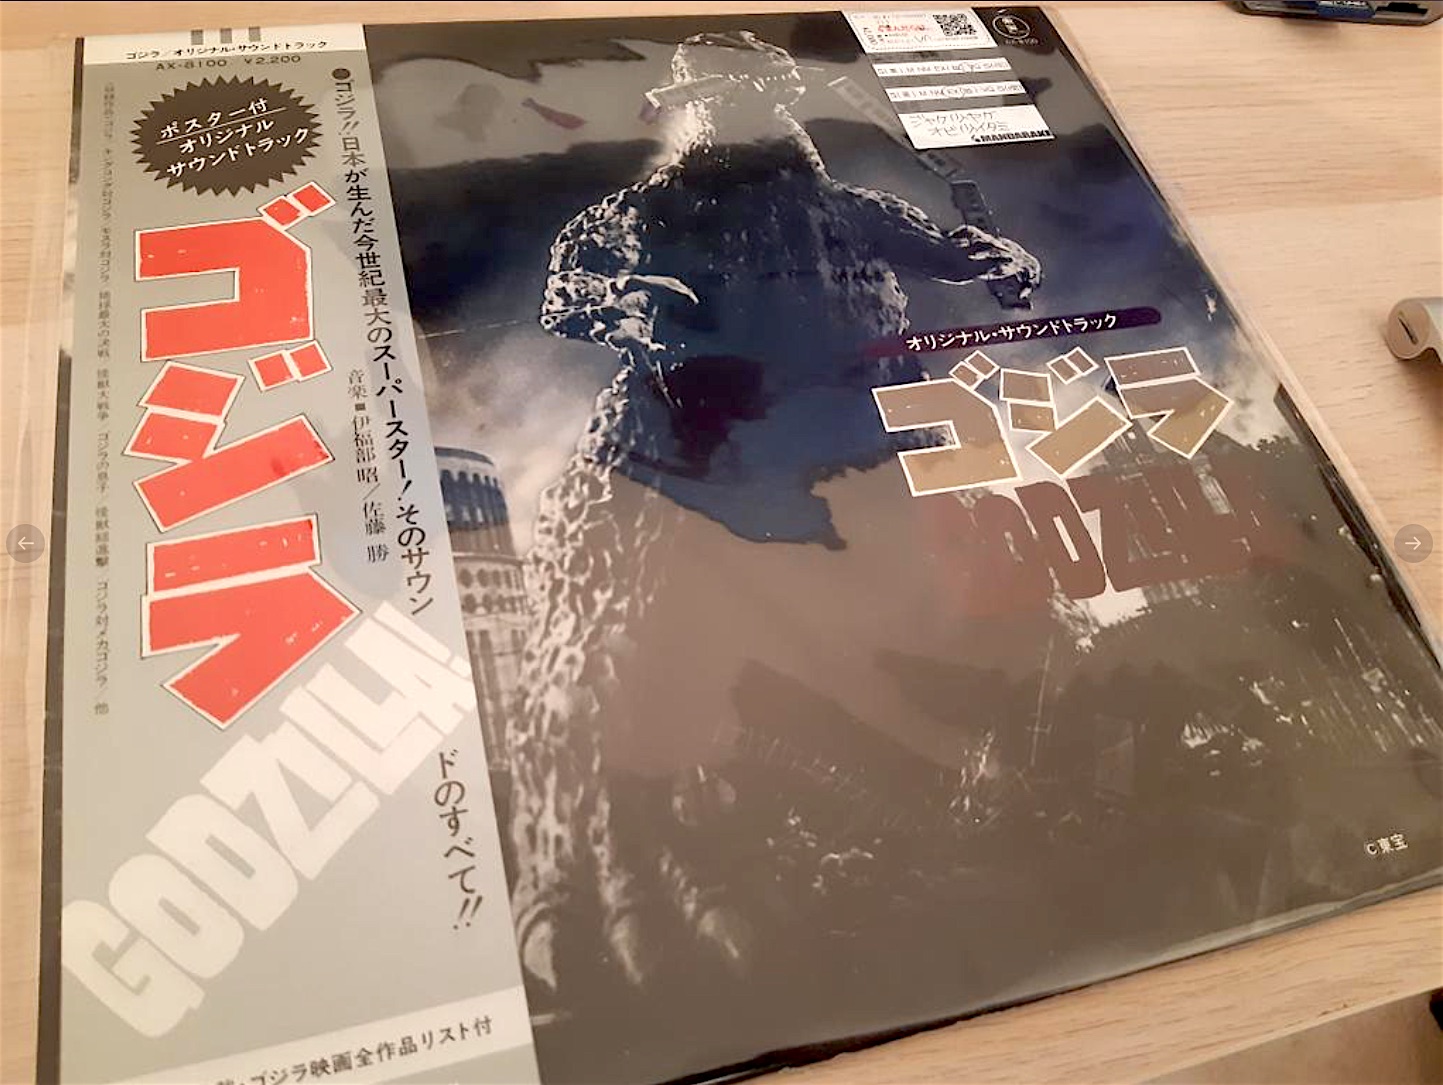 Godzilla Japanese soundtrack vinyl LP.jpg